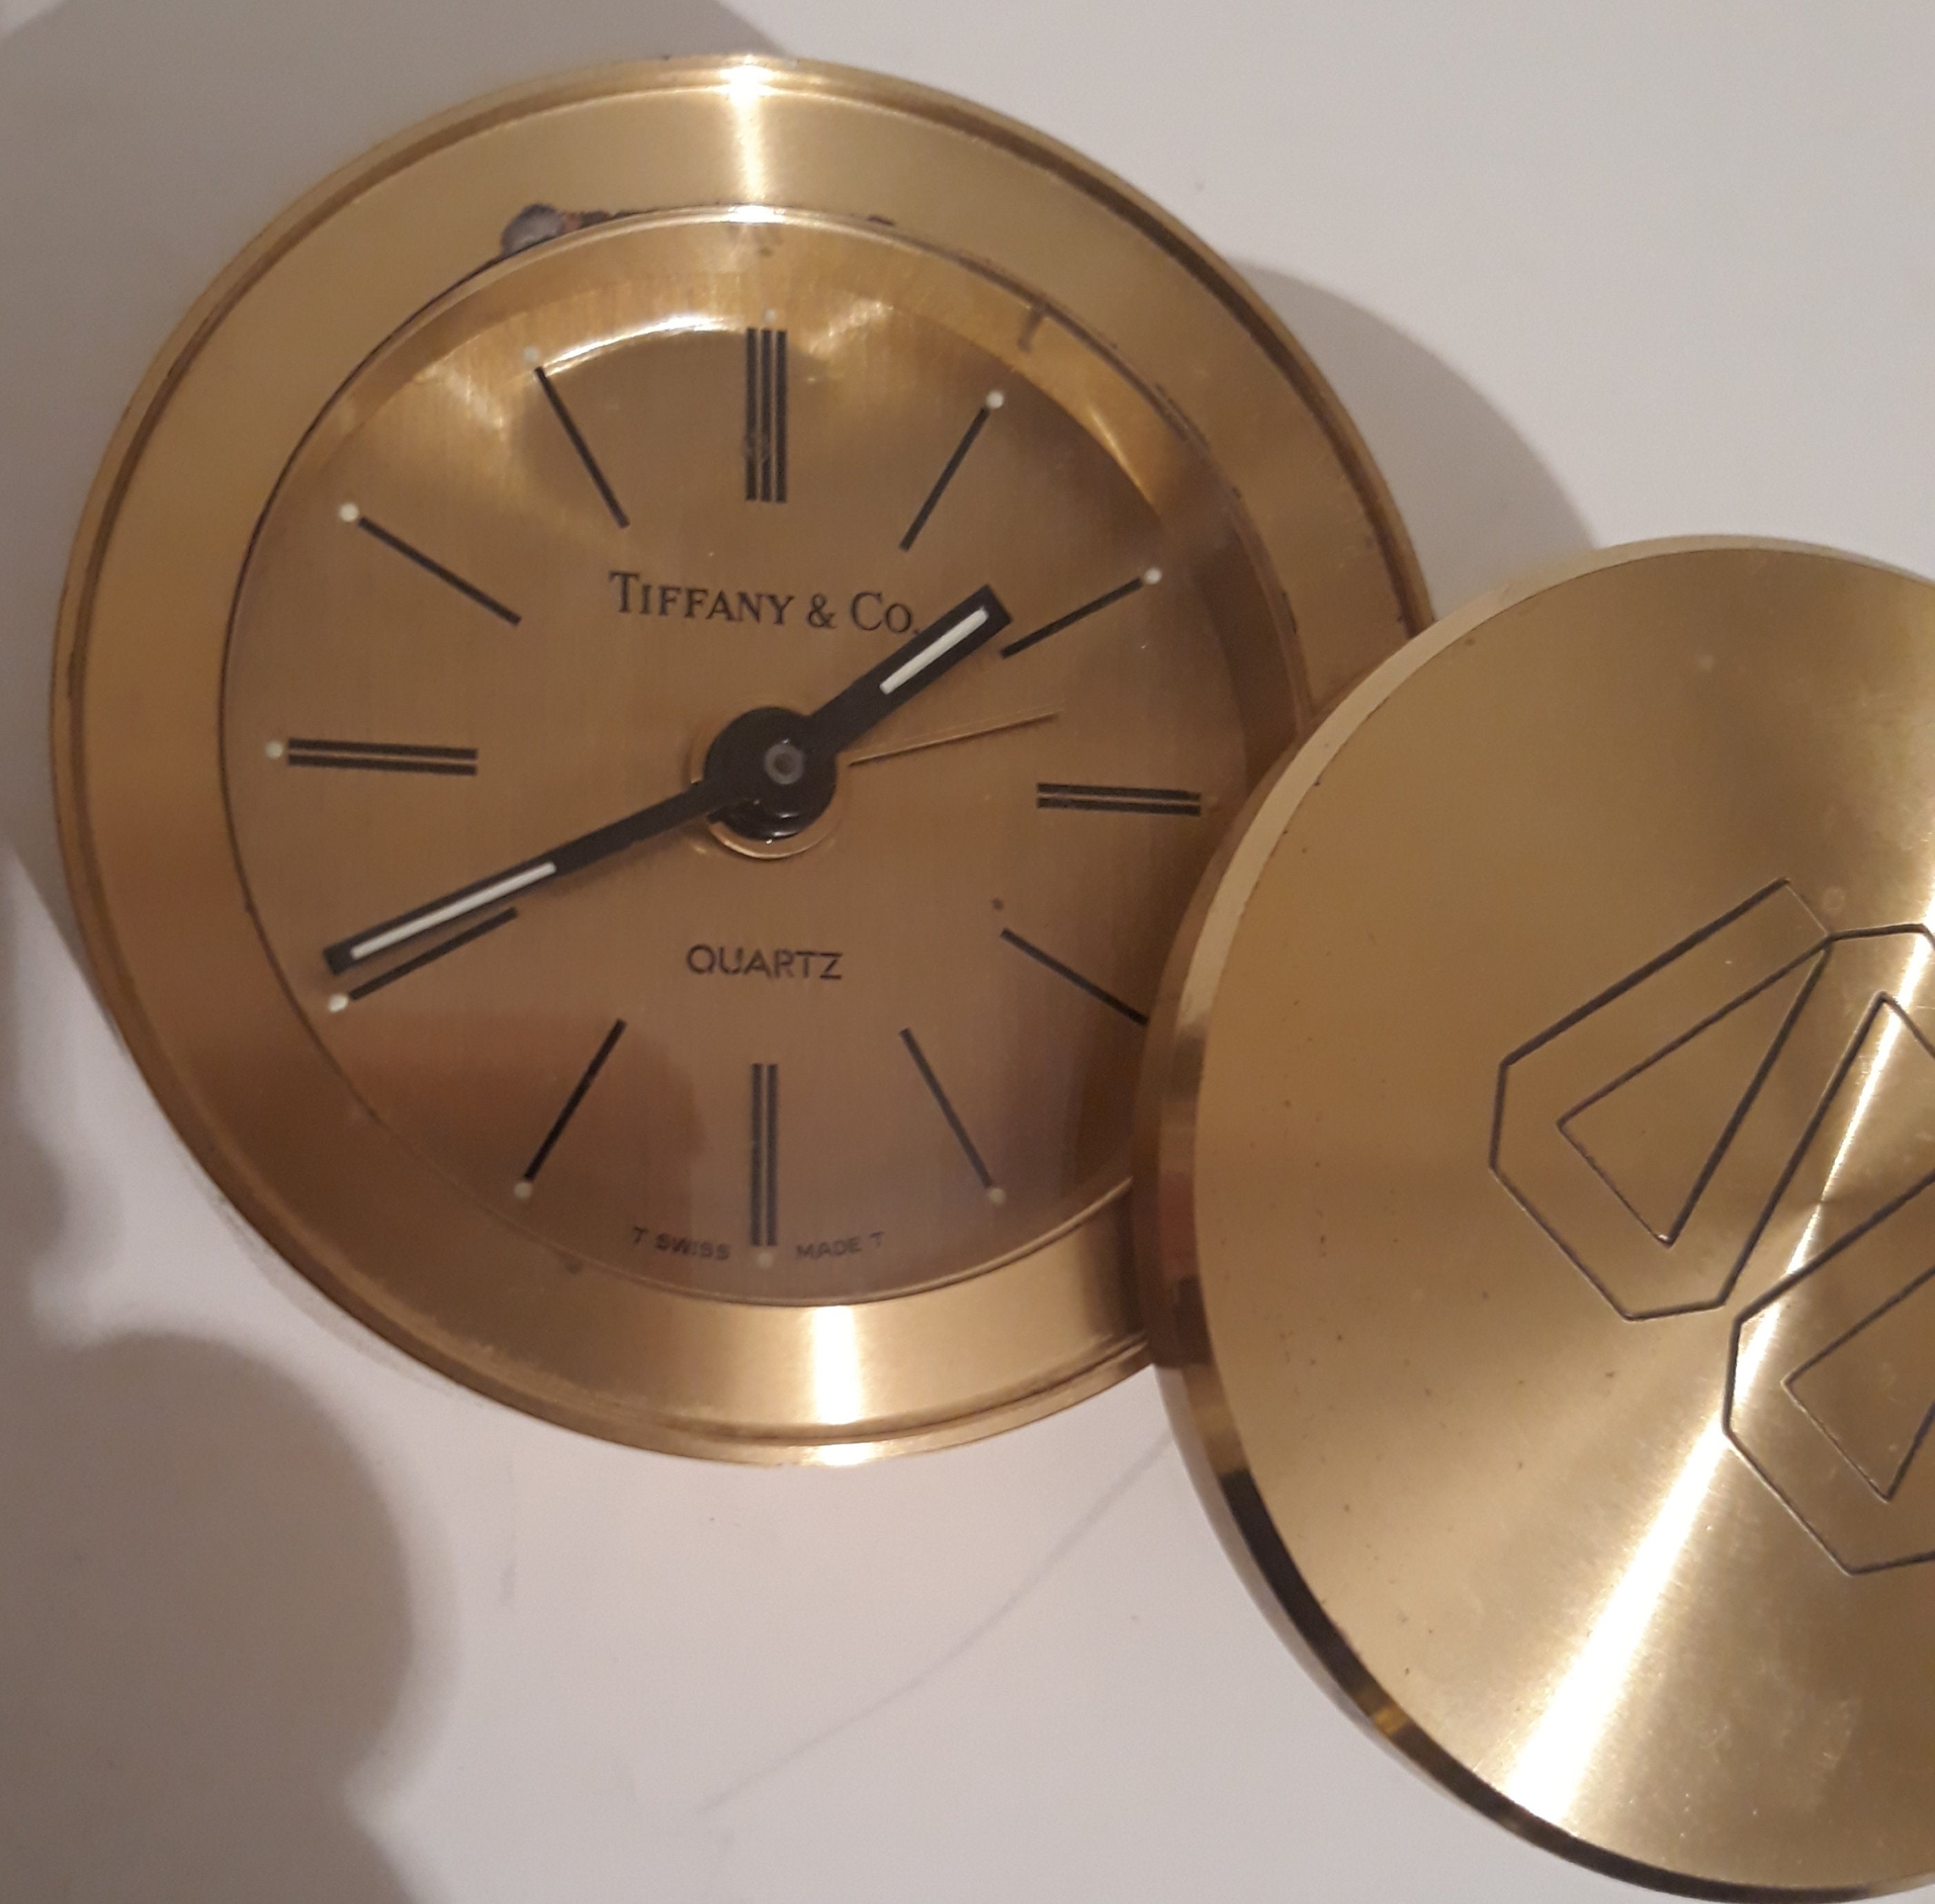 Tiffany & Co., Pendulette de voyage or, Gold travel clock